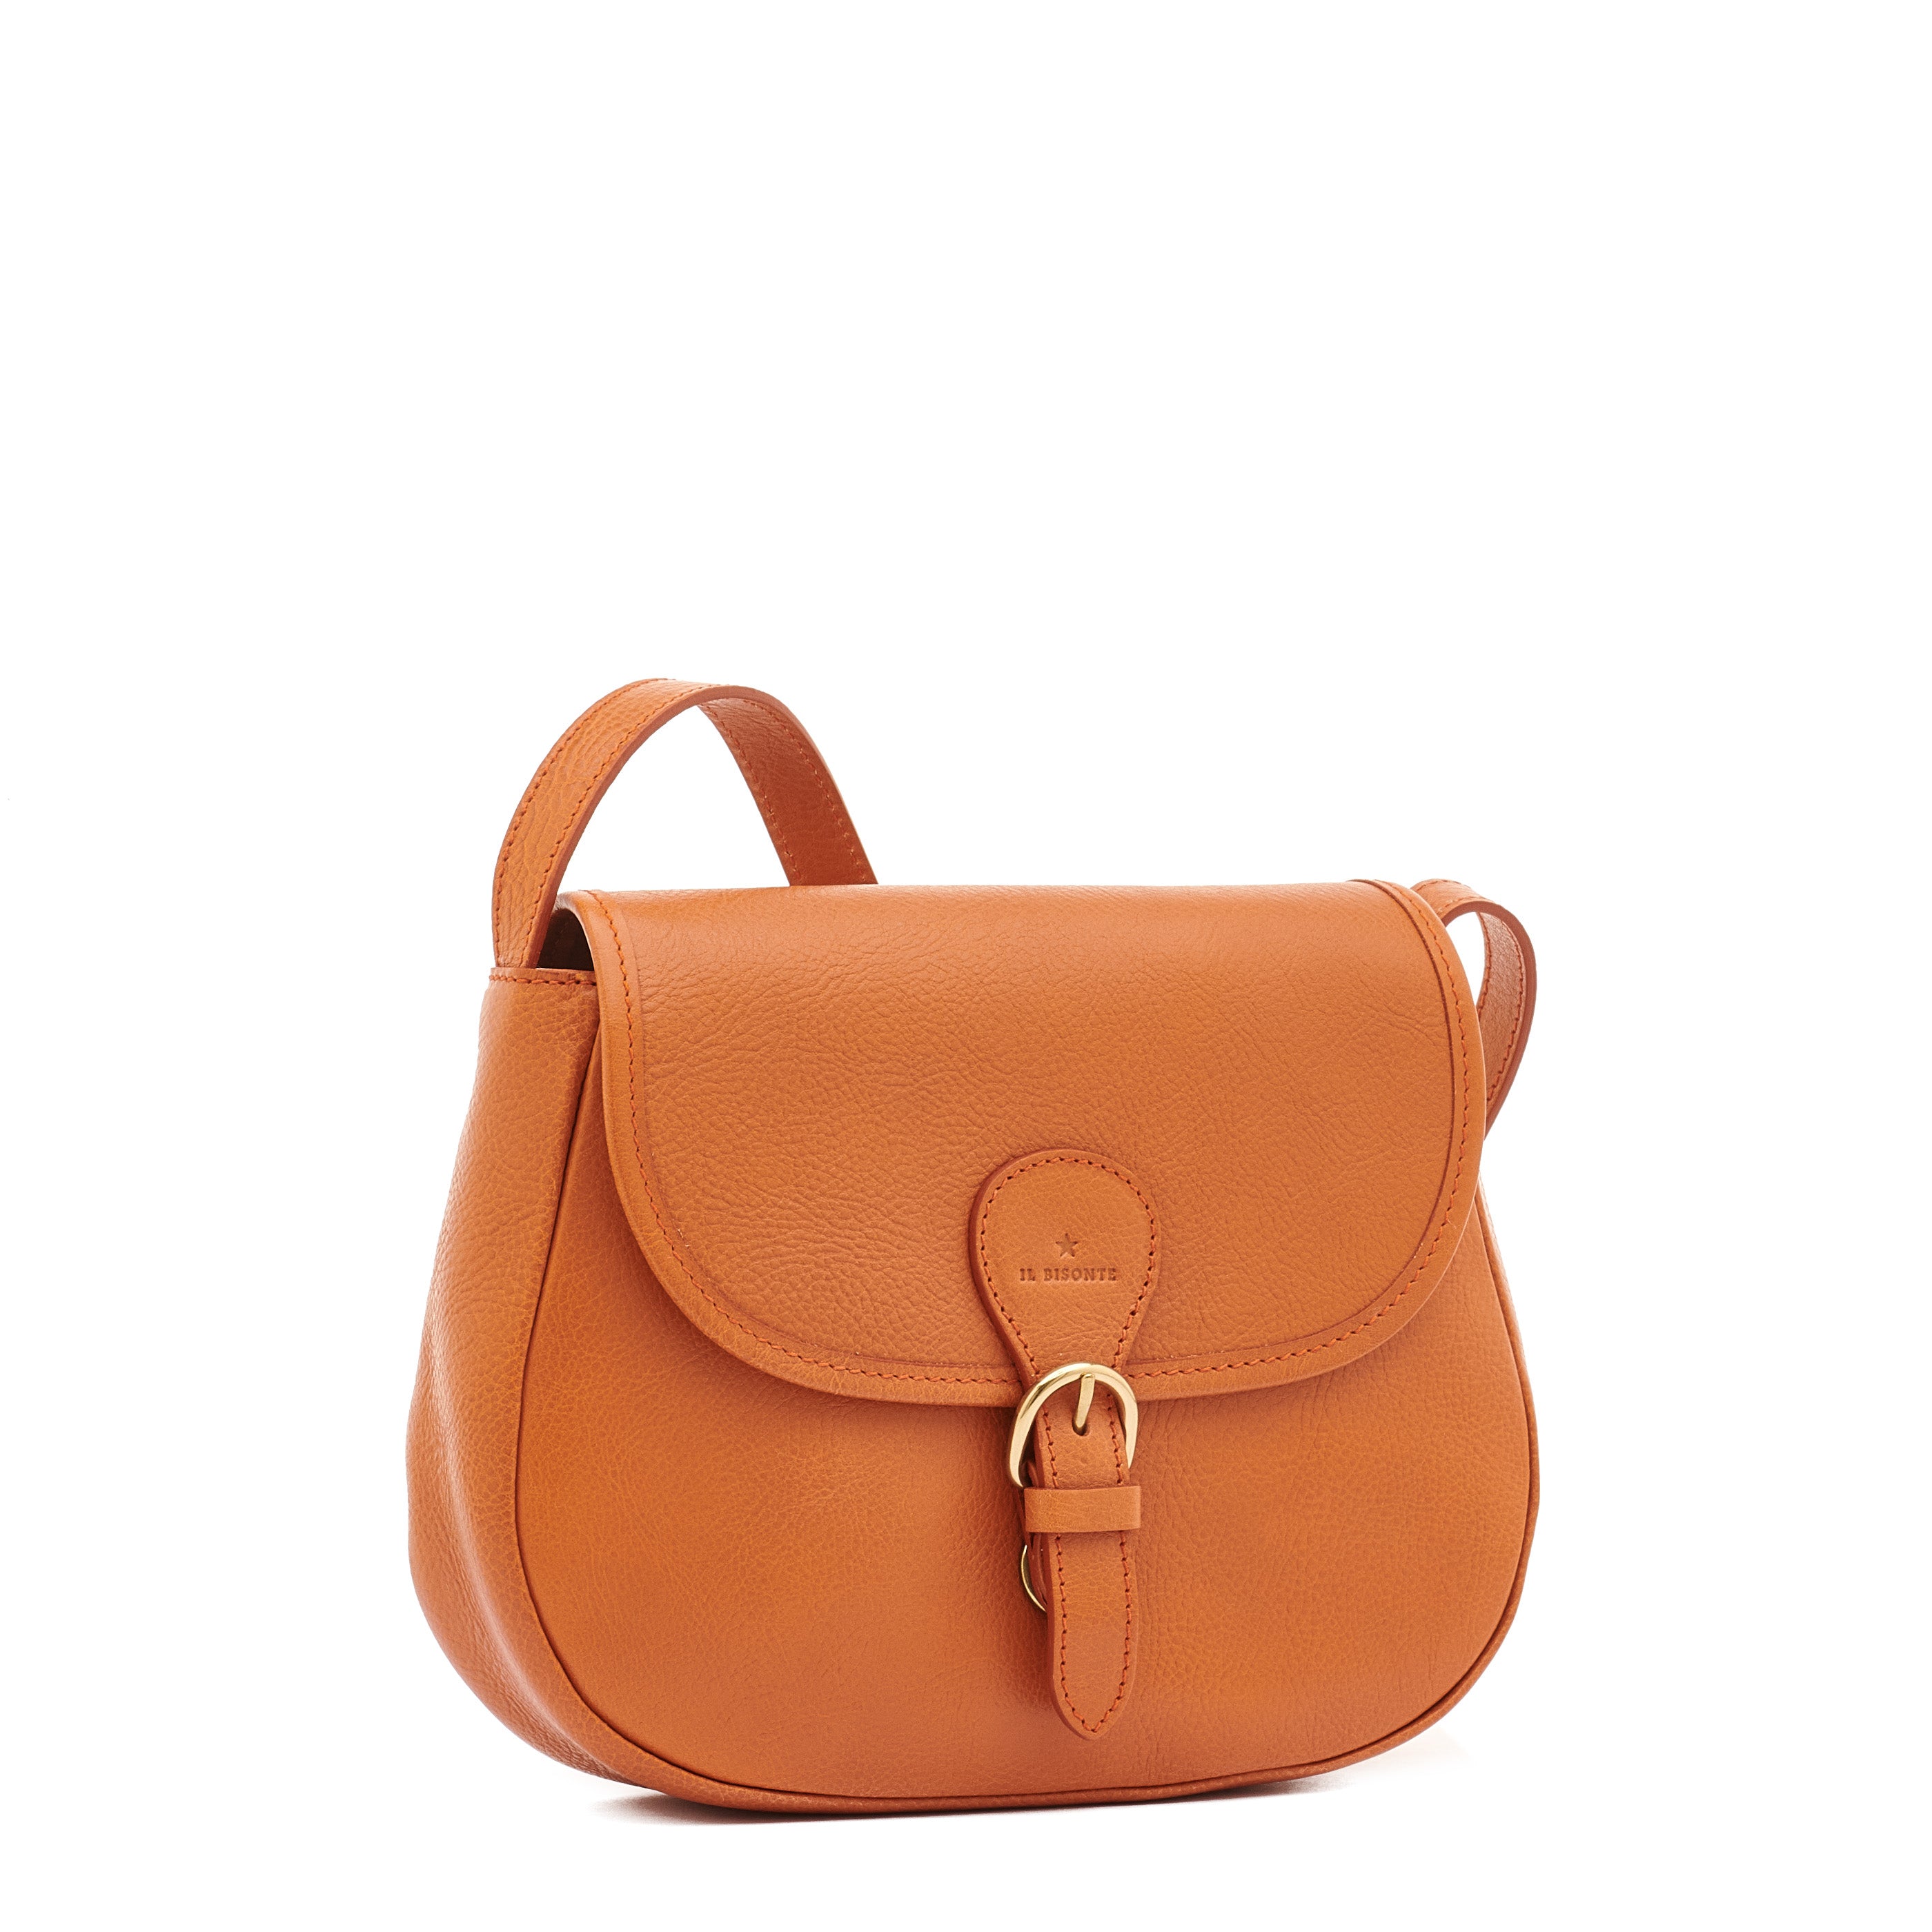 GIANI BERNINI Classic leather women's hobo shoulder bag purse -BLACK | eBay